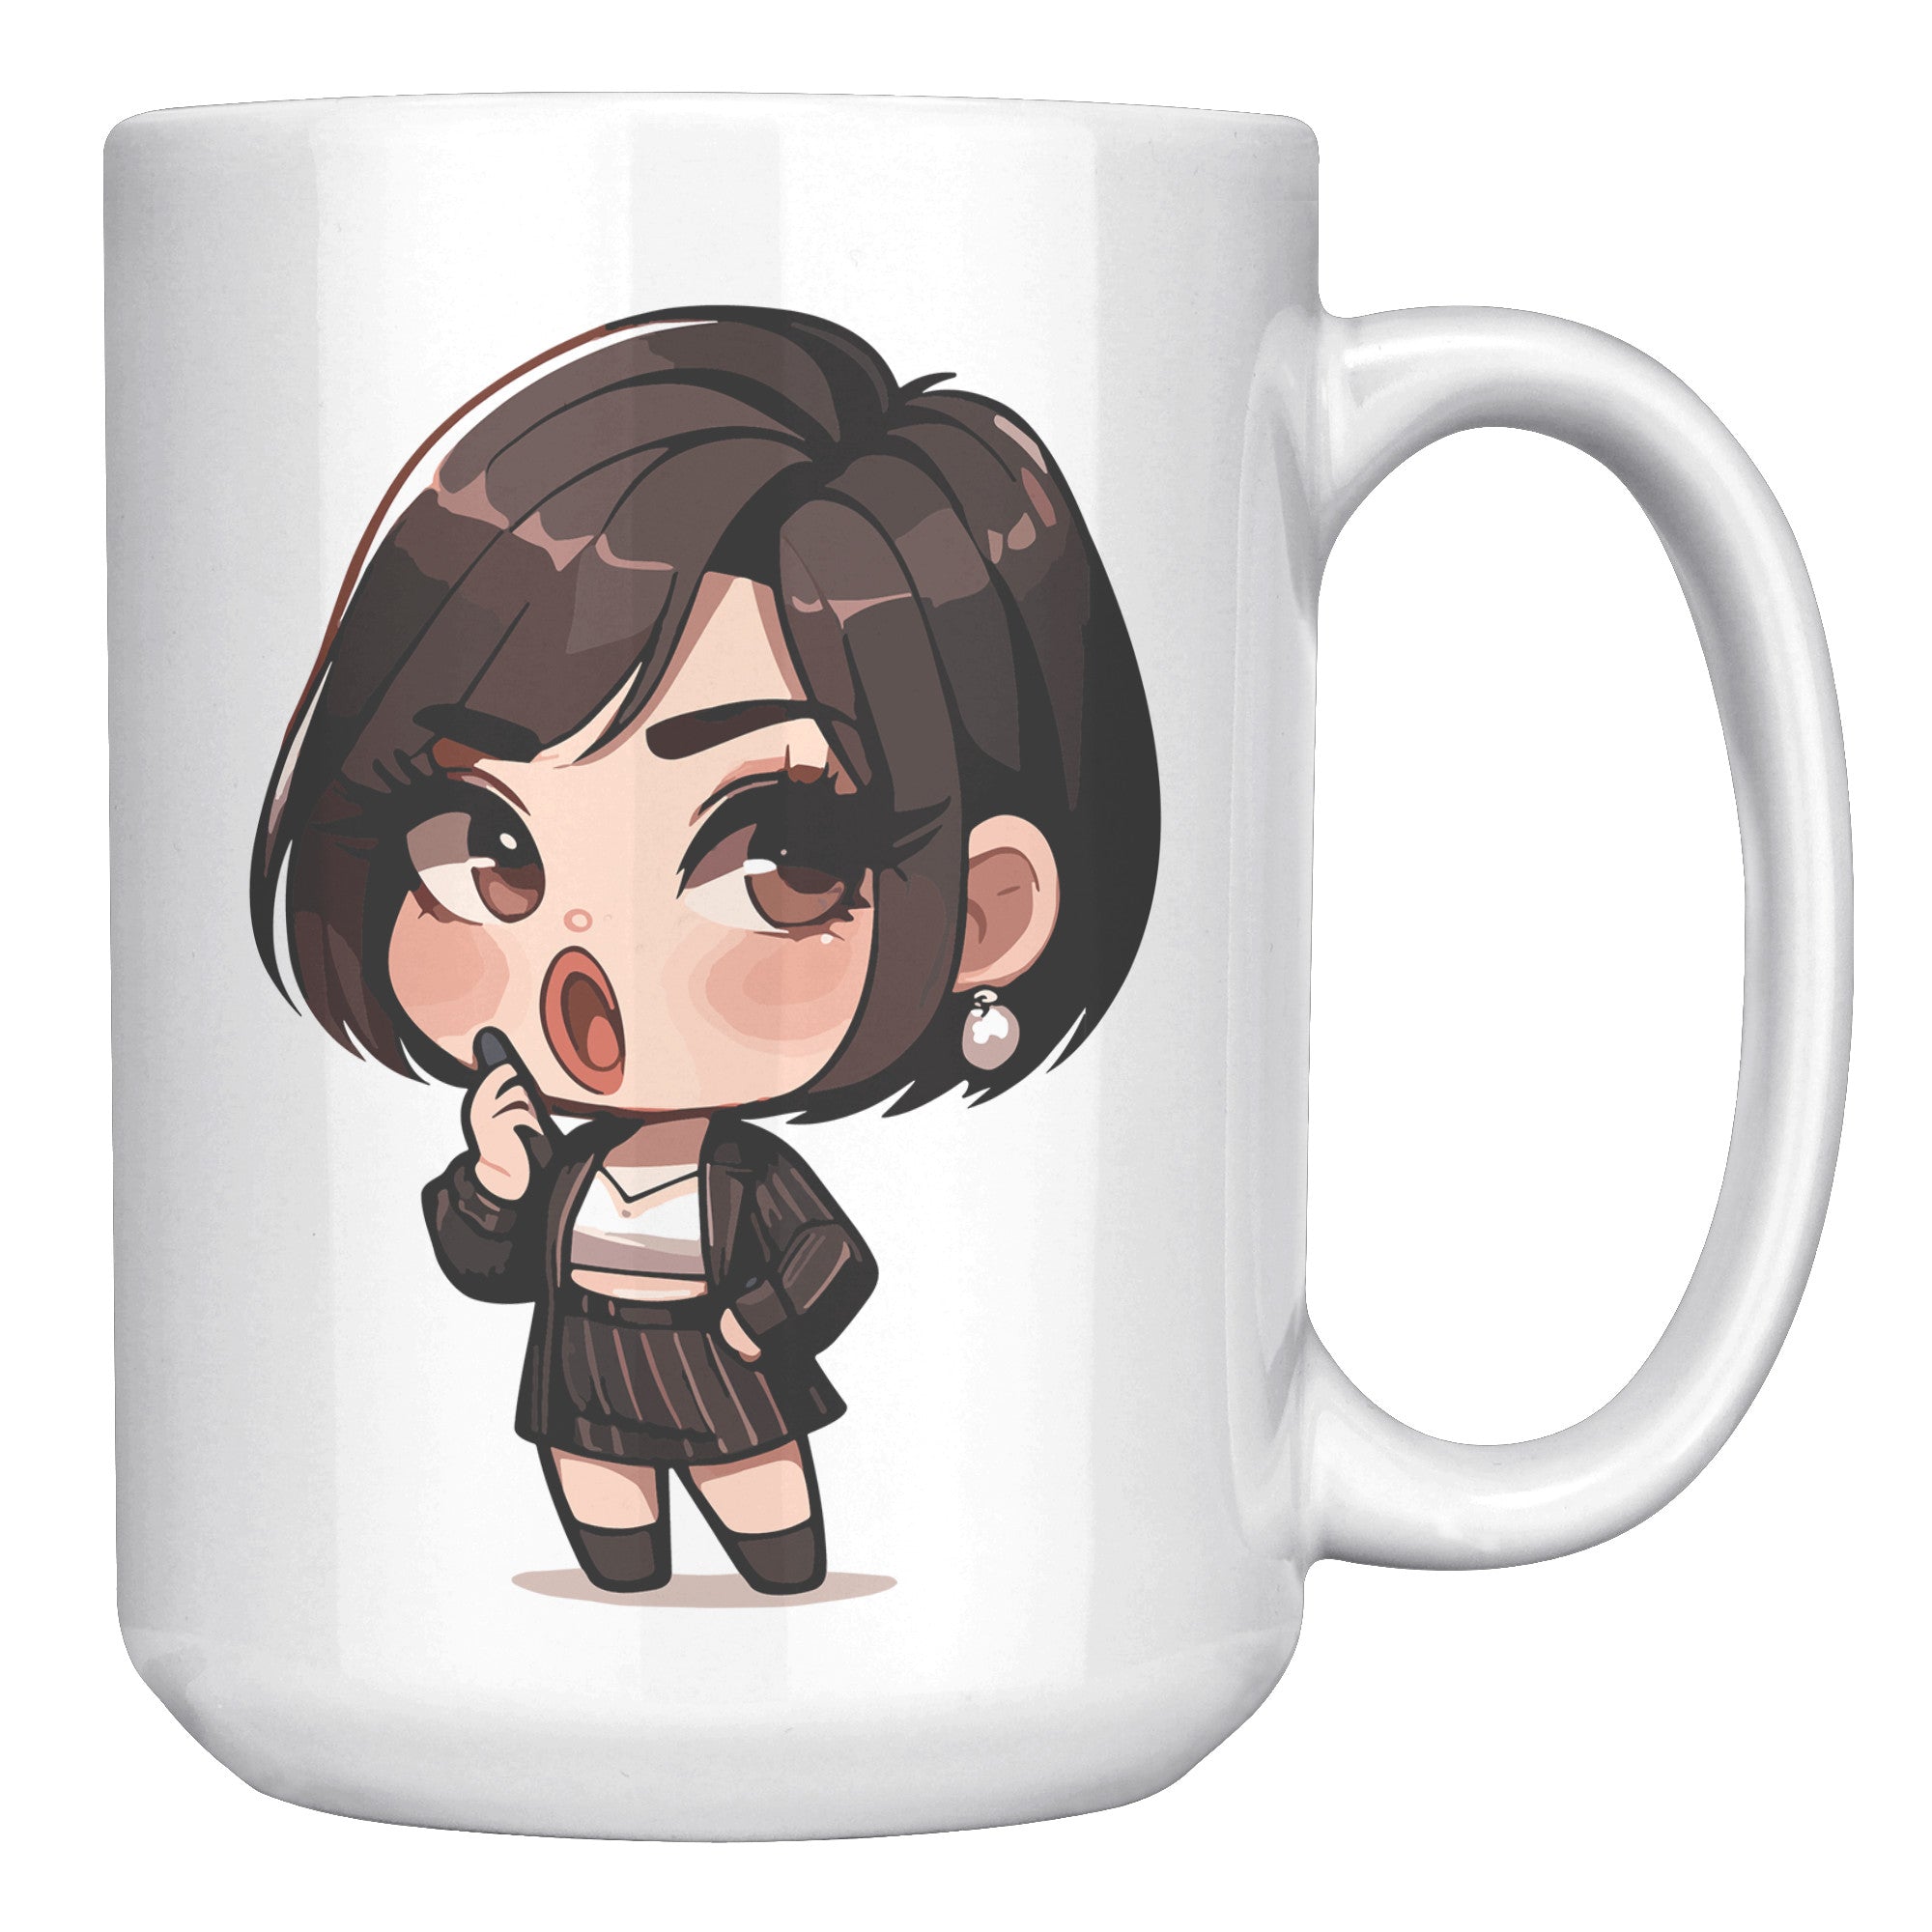 "Marites Gossip Queen Coffee Mug - Cute Cartoon 'Ano Ang Latest?' Cup - Perfect Chismosa Gift - Filipino Slang Tea Mug" - VVV1